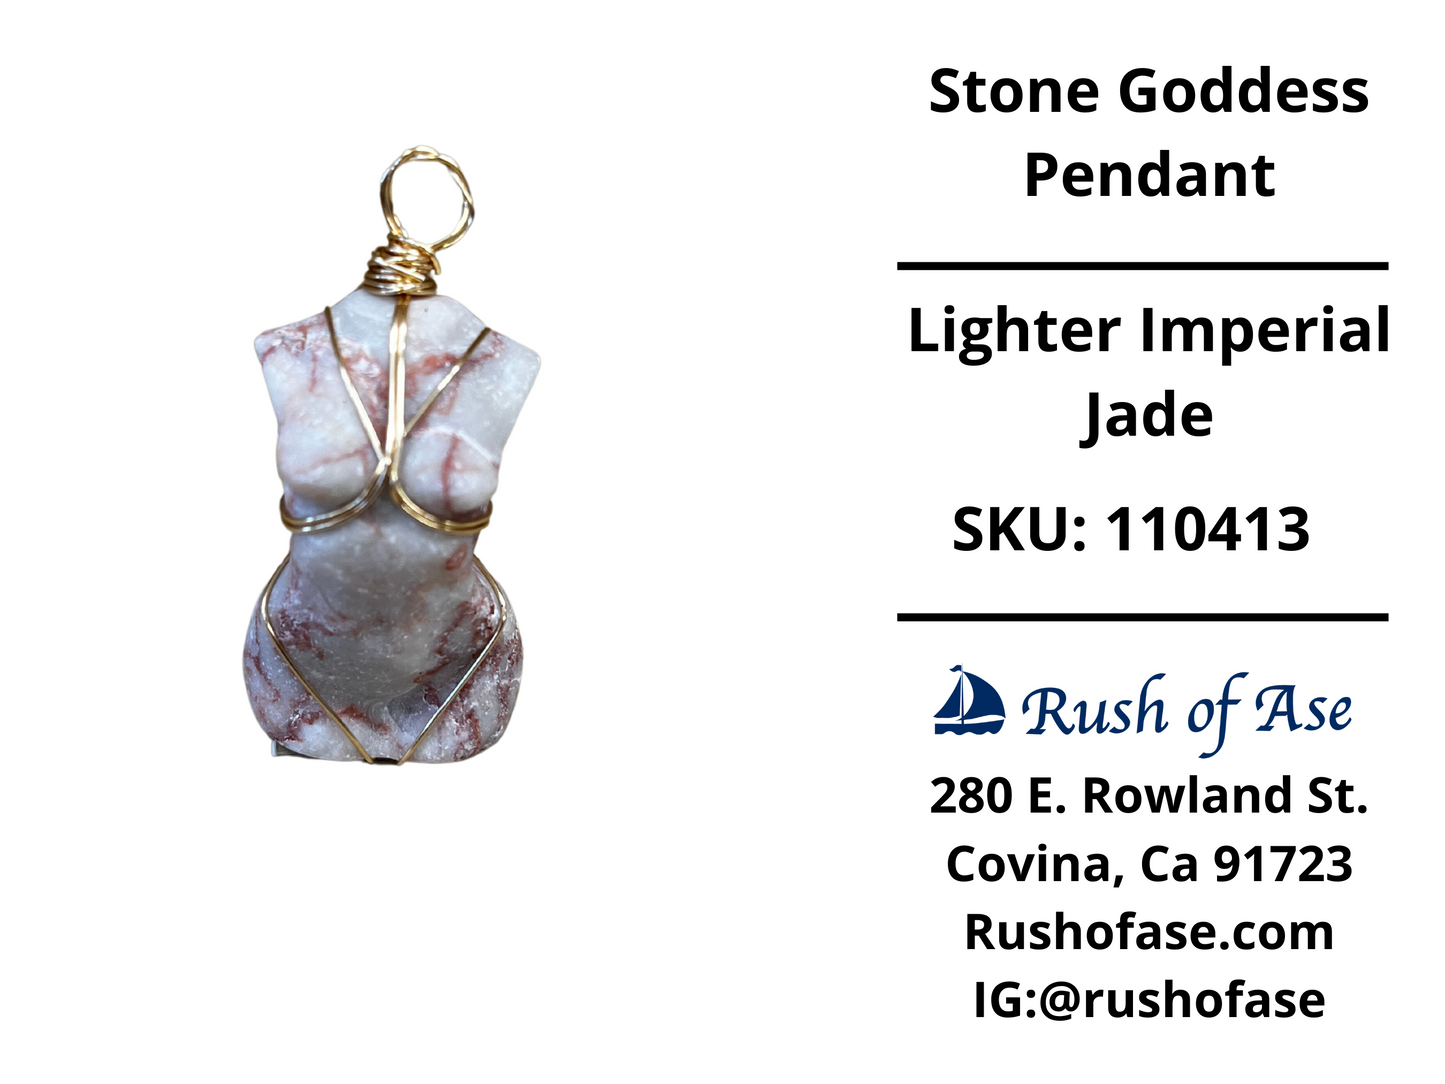 Stone Goddess Pendant Necklace